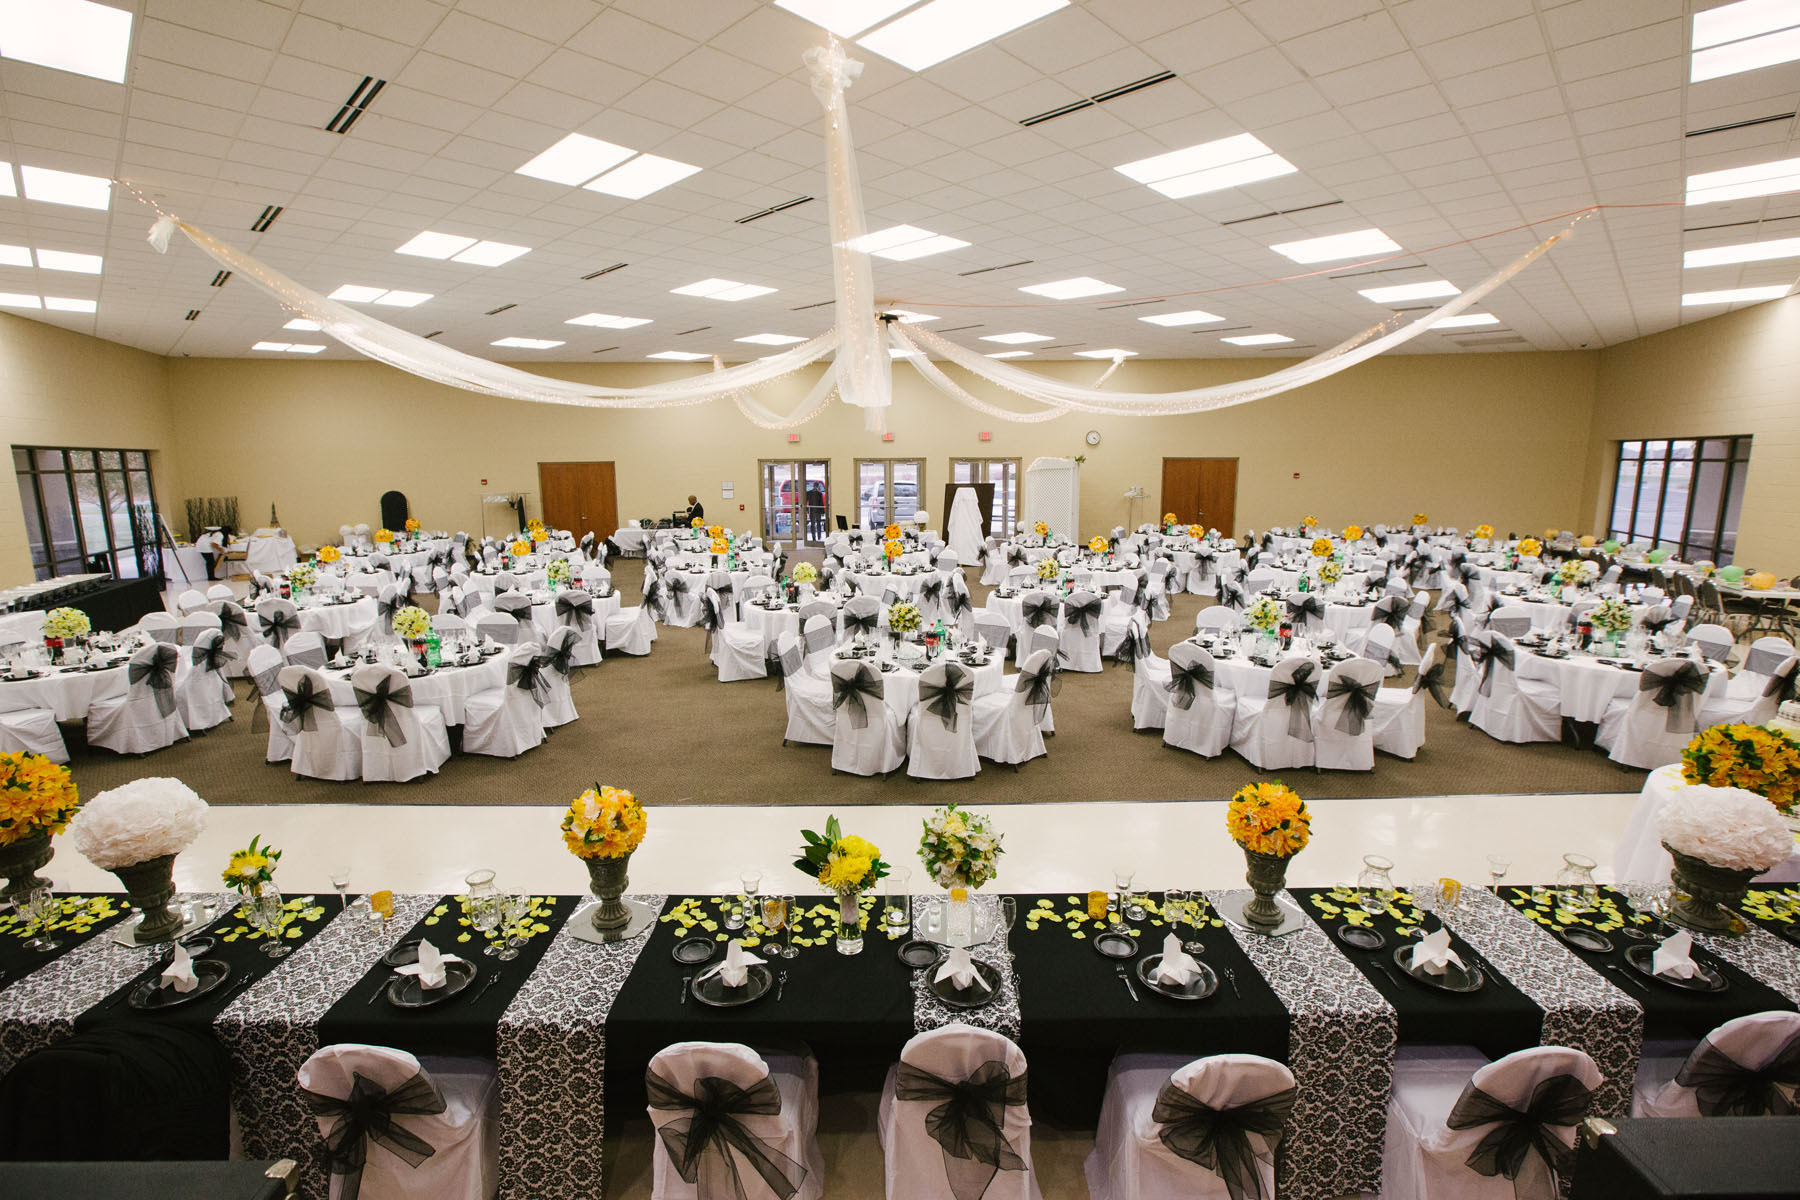  Wedding  Reception  Venues  in Wichita  KS  Wichita  Wedding  